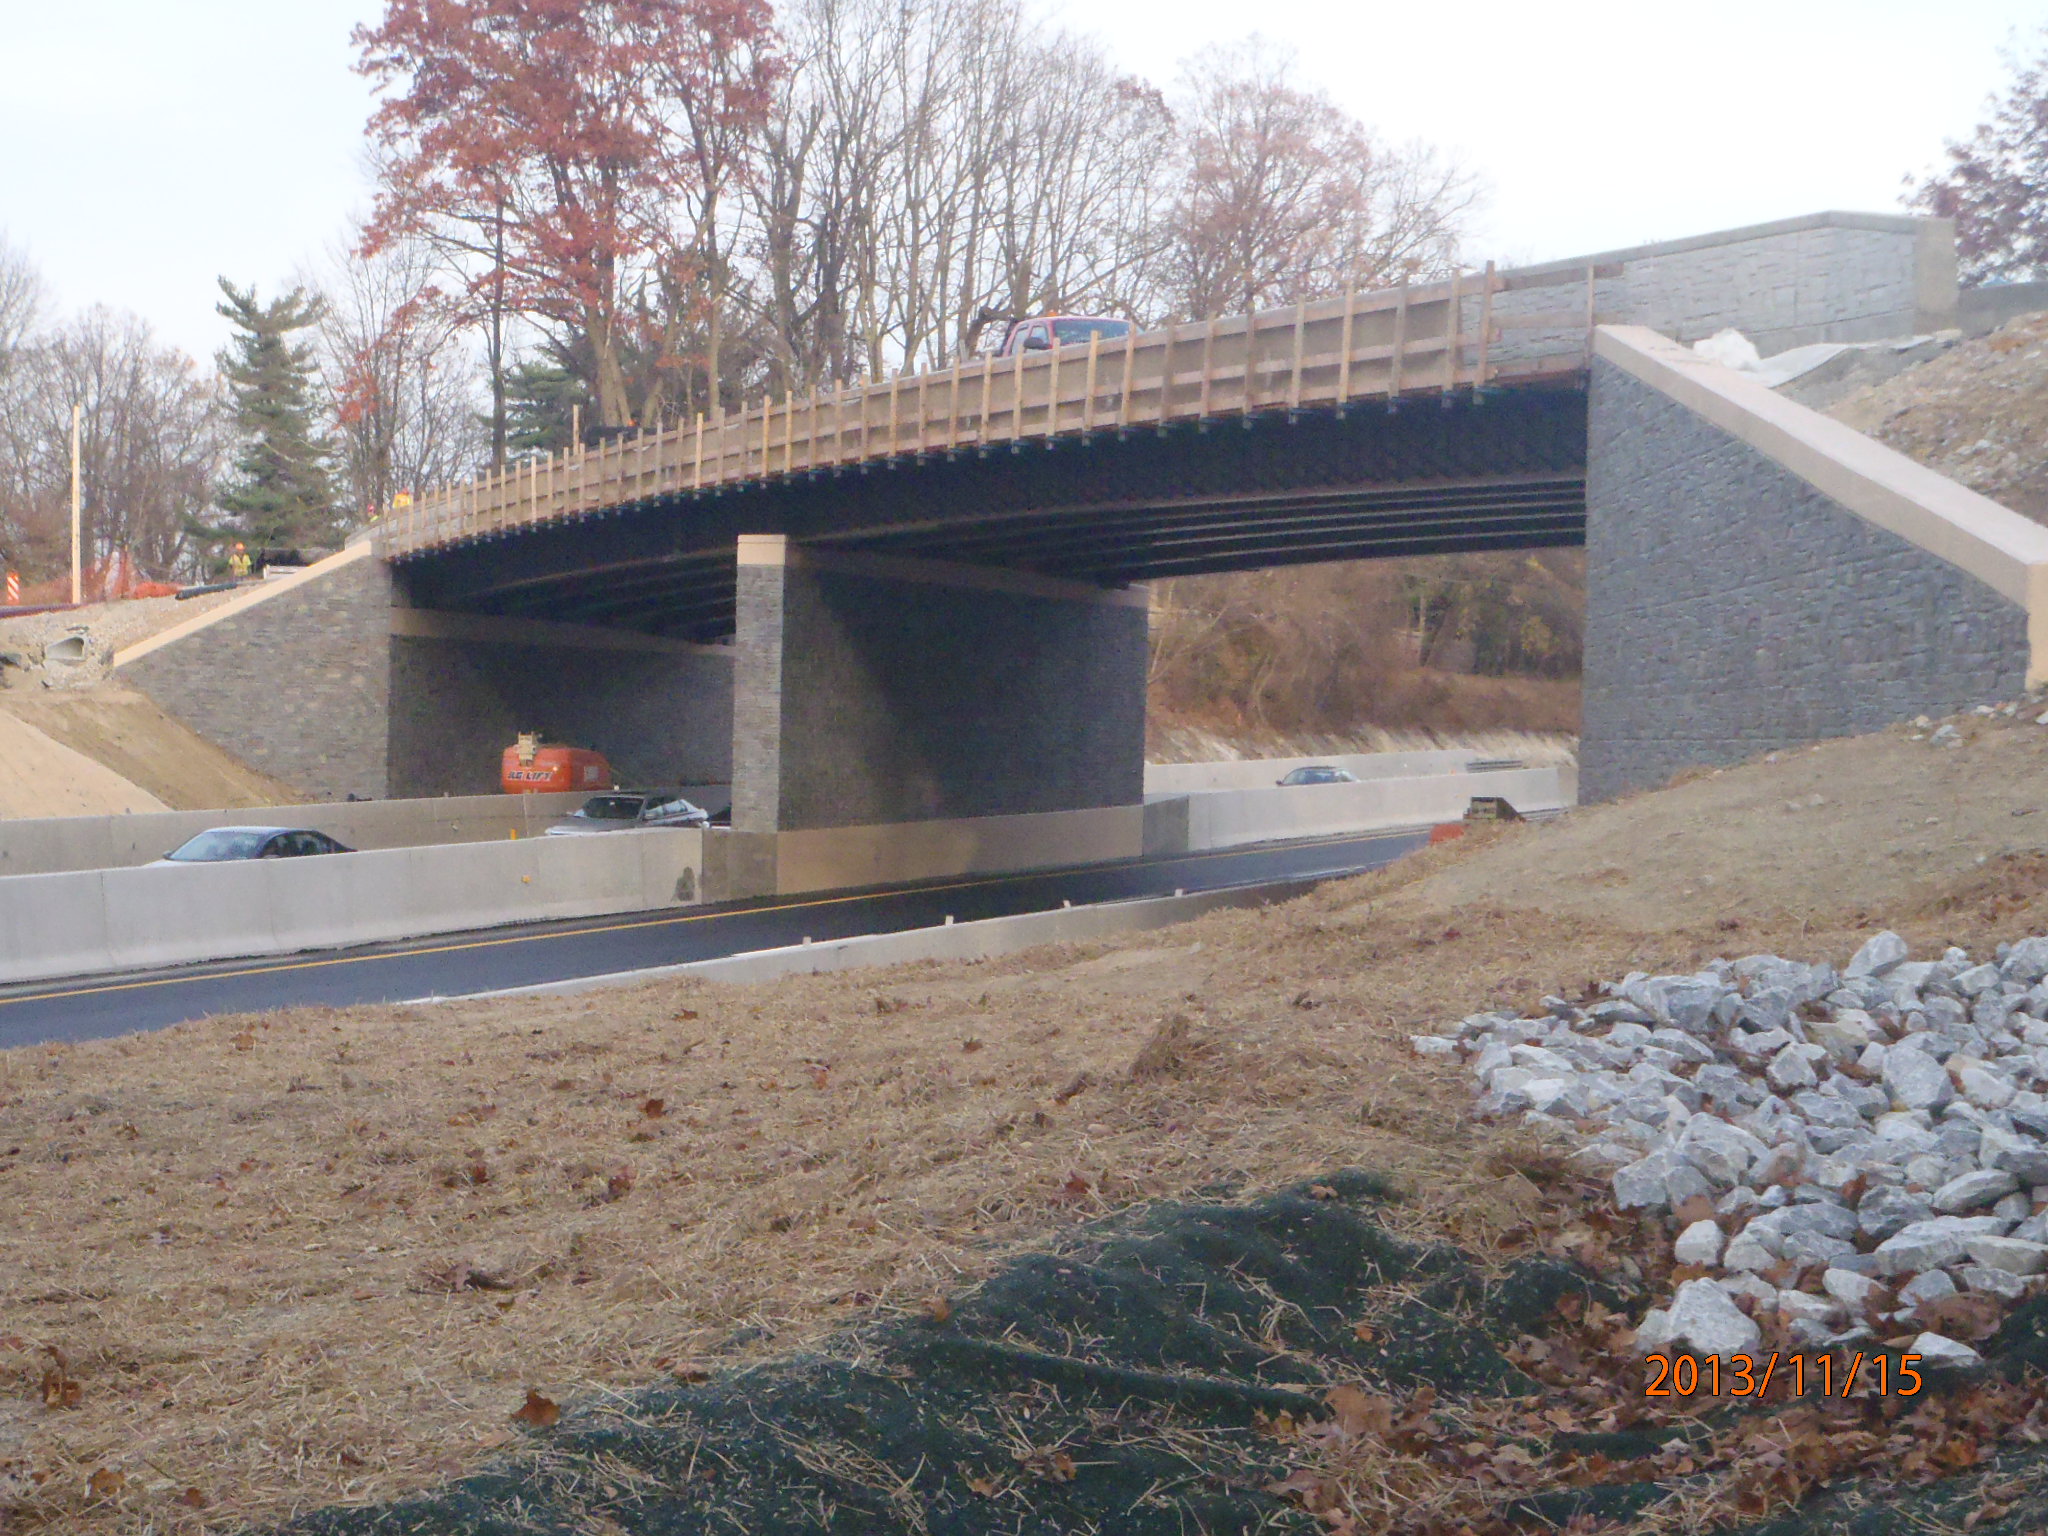 Wall treatments along the new bridge and underpass. November 2013.